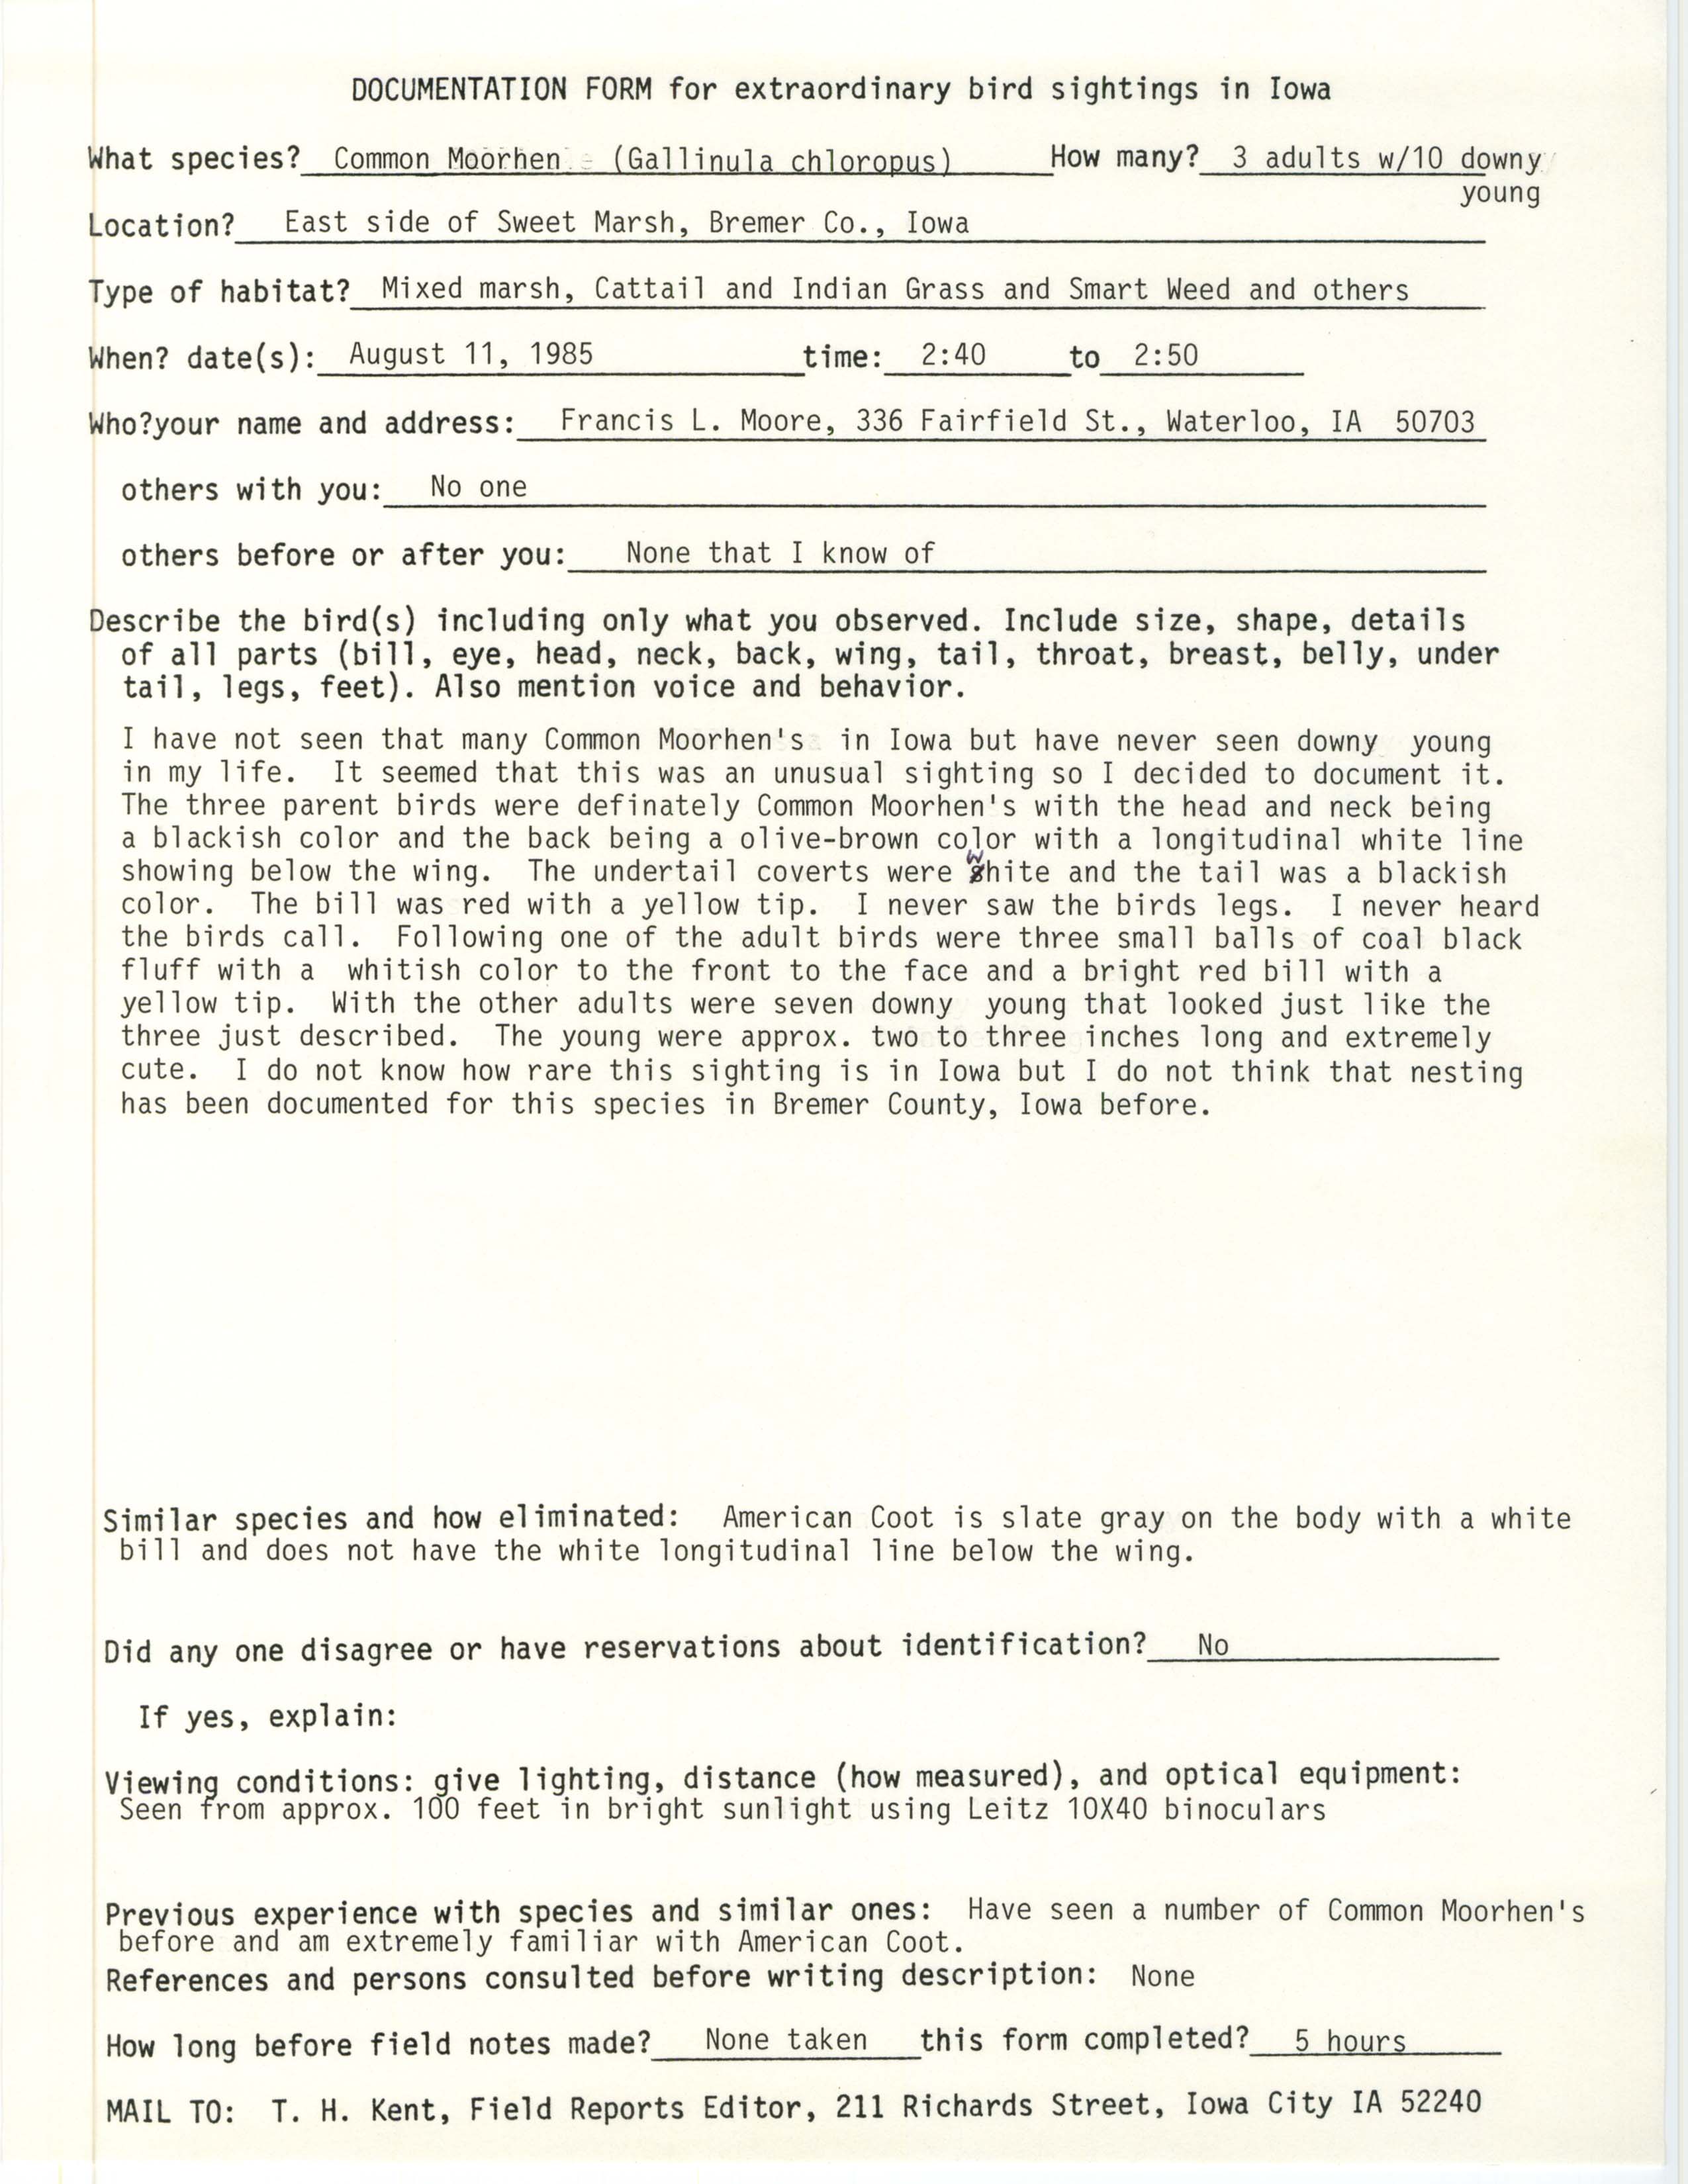 Rare bird documentation form for Common Moorhen at Sweet Marsh, 1985